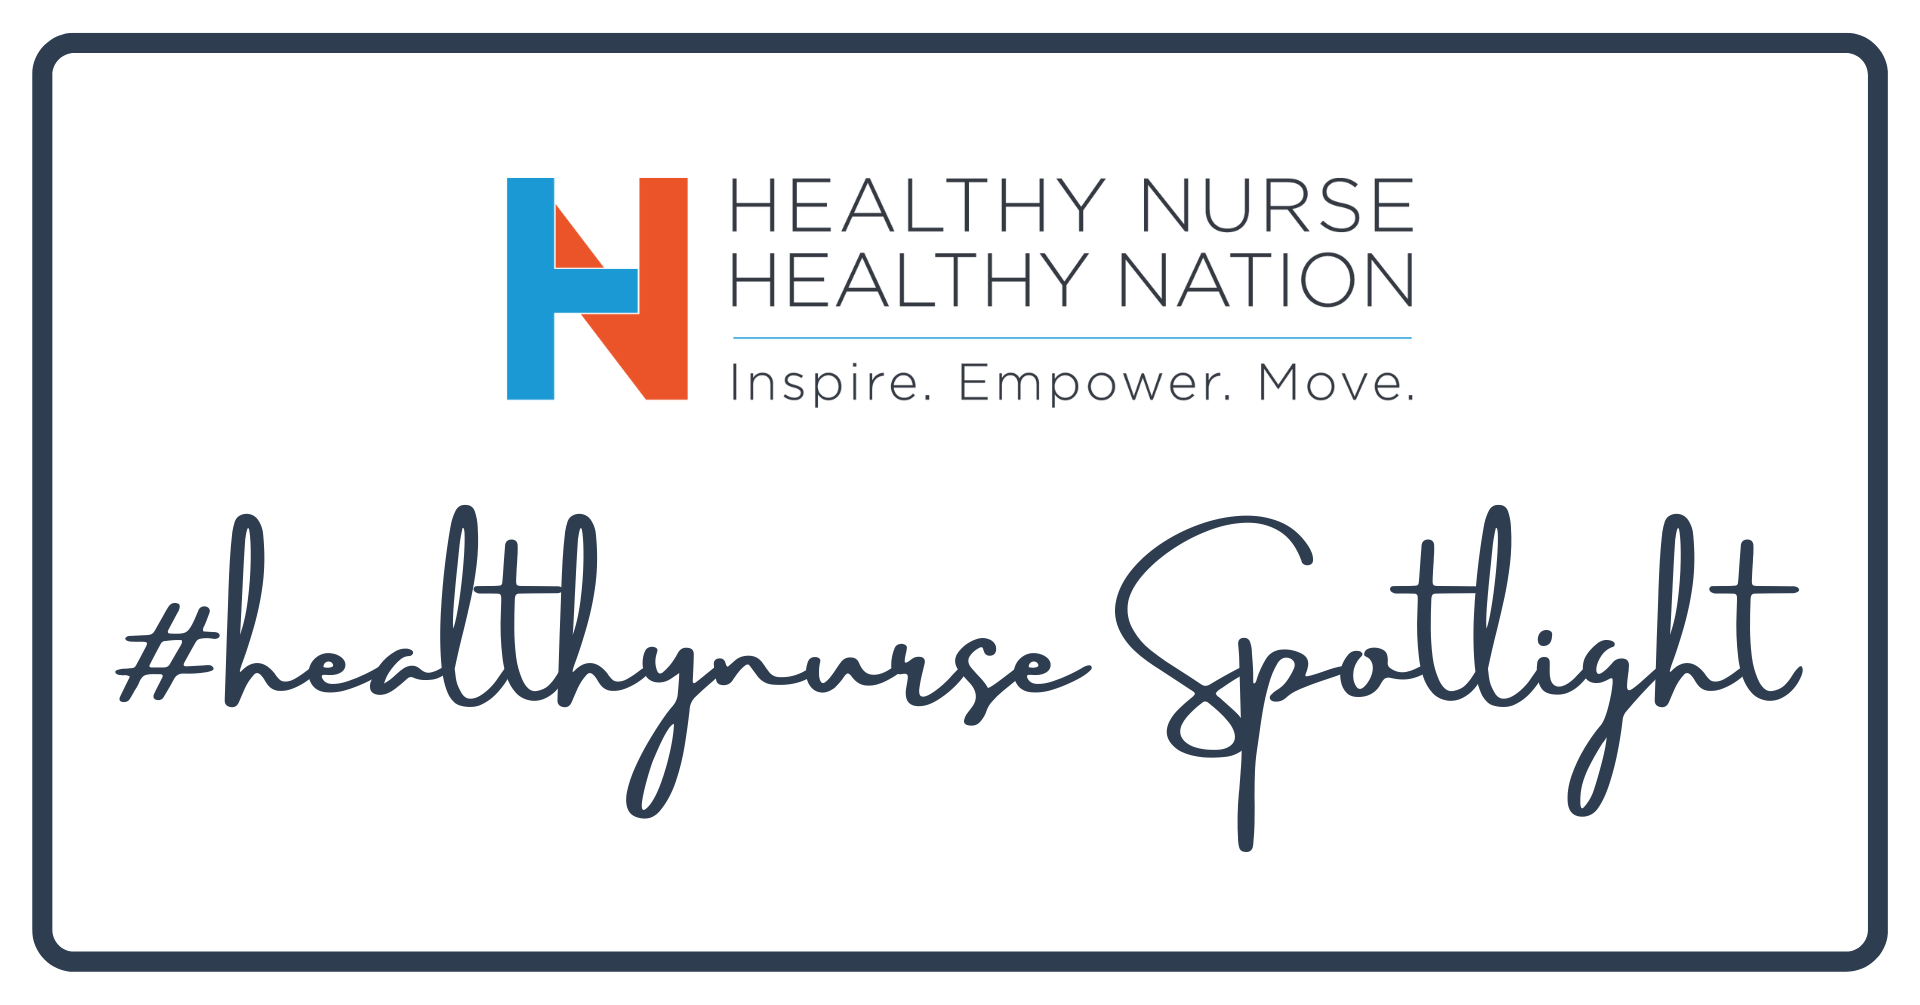 Healthy Nurse, Healthy Nation™ - #healthynurse Spotlight Series - Brenda Lee Word-Williams, RN, BSN, CMSRN 4303